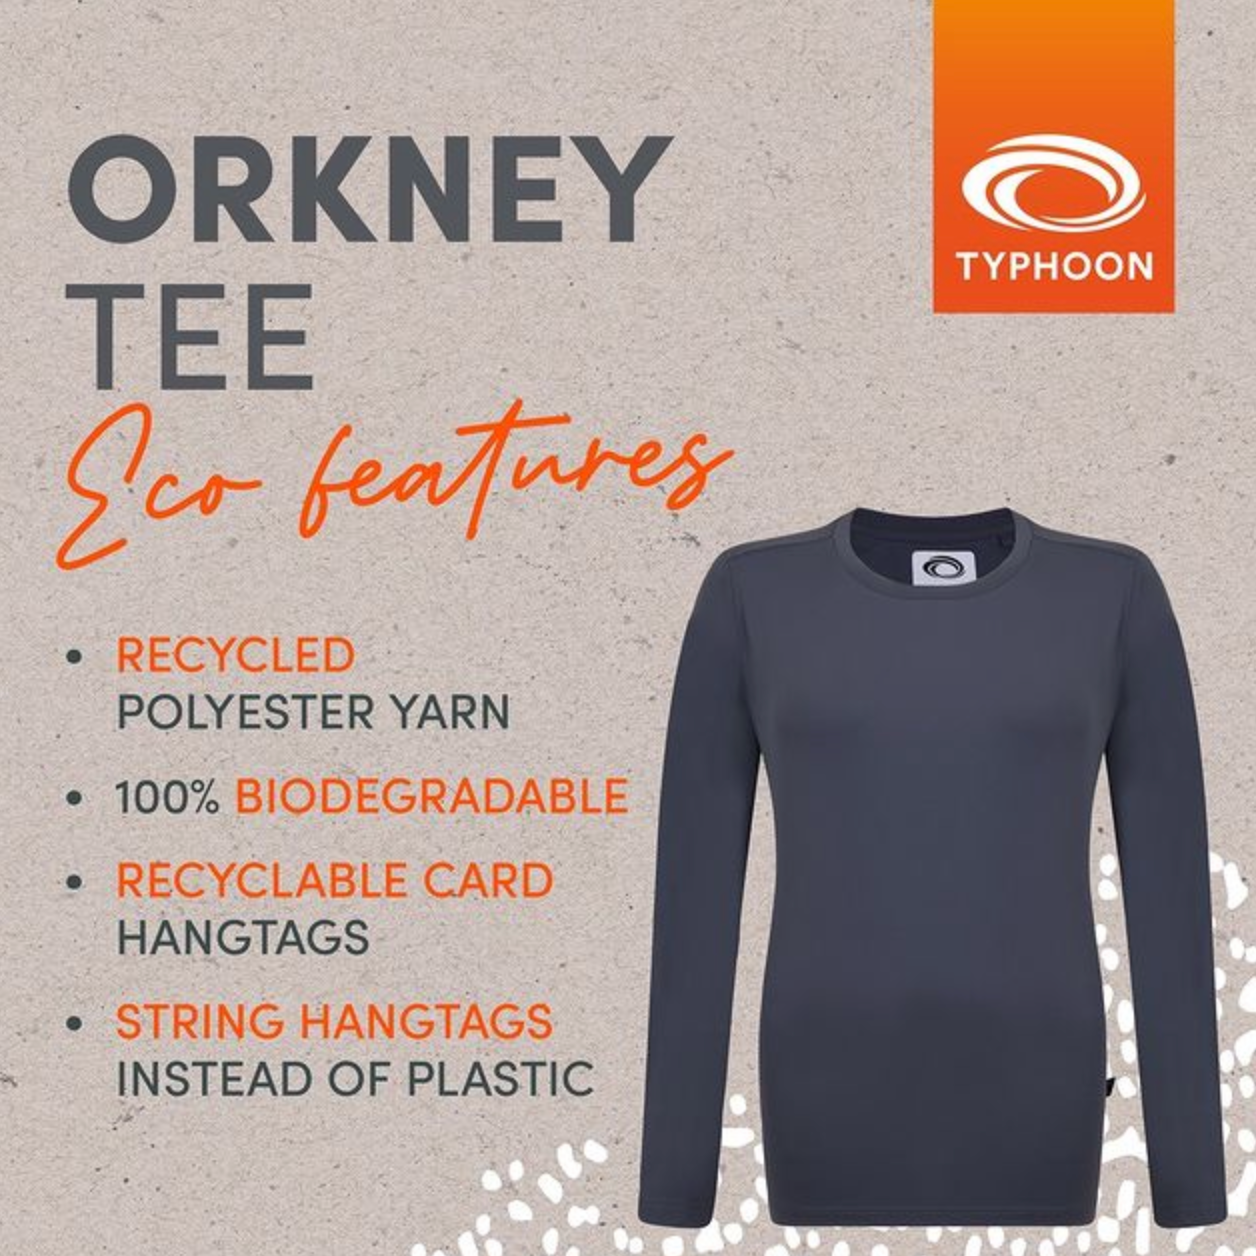 Typhoon Orkney Short Sleeve Tech Tee - Mens